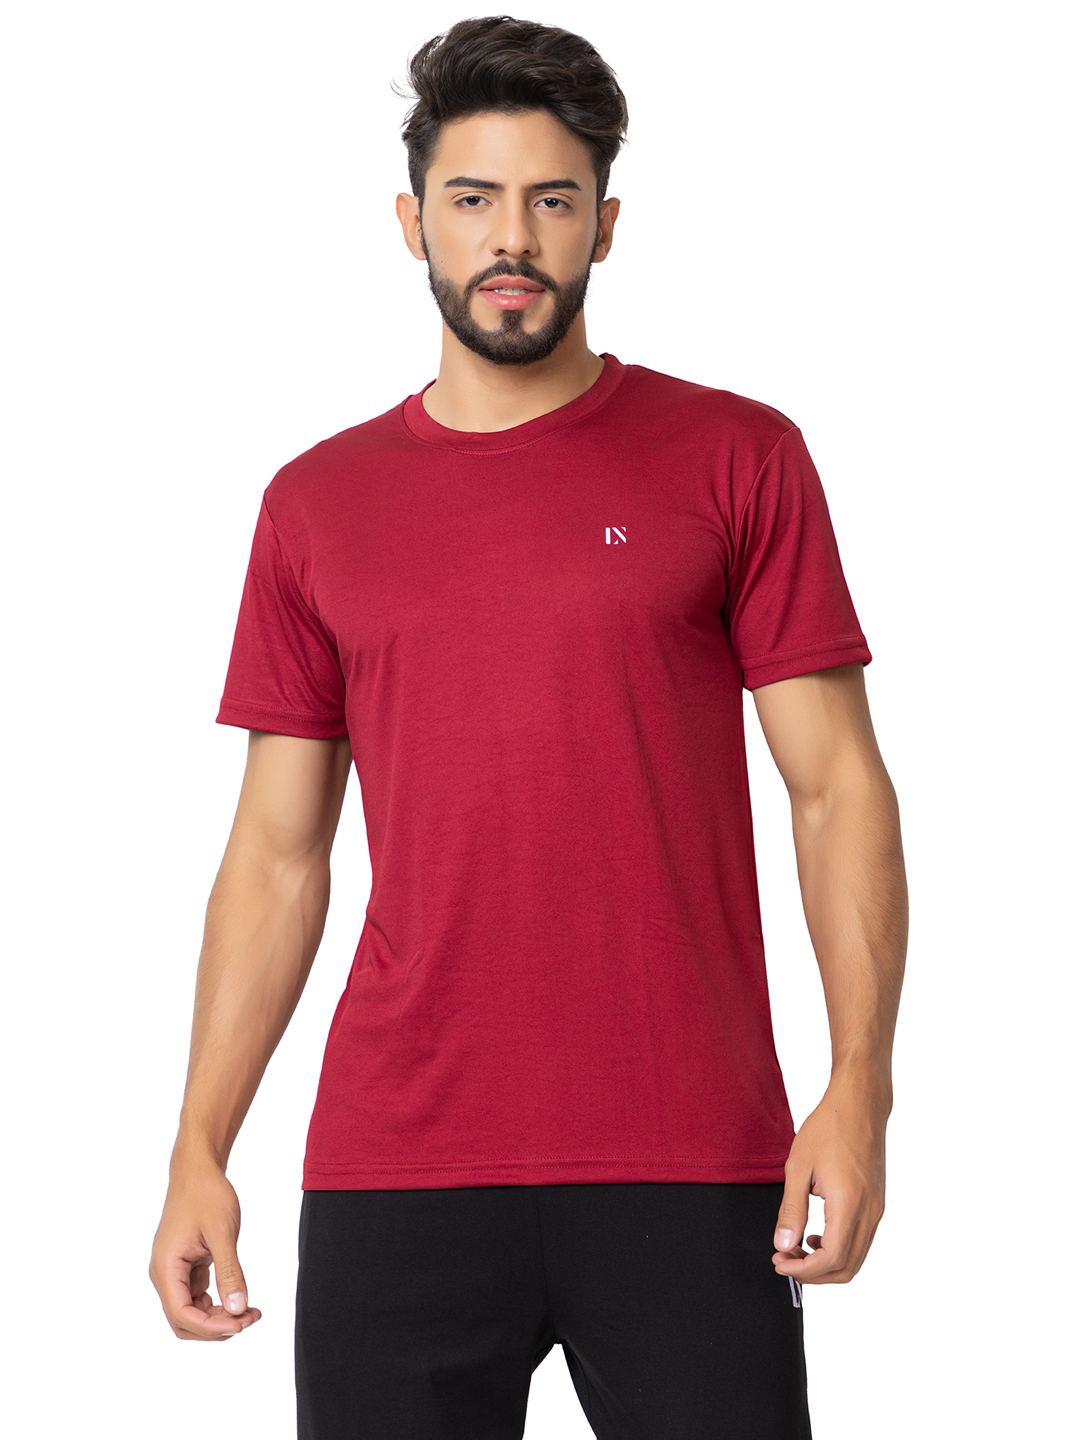 Lexon Sports Dry-Fit T-Shirt 100% Polyester